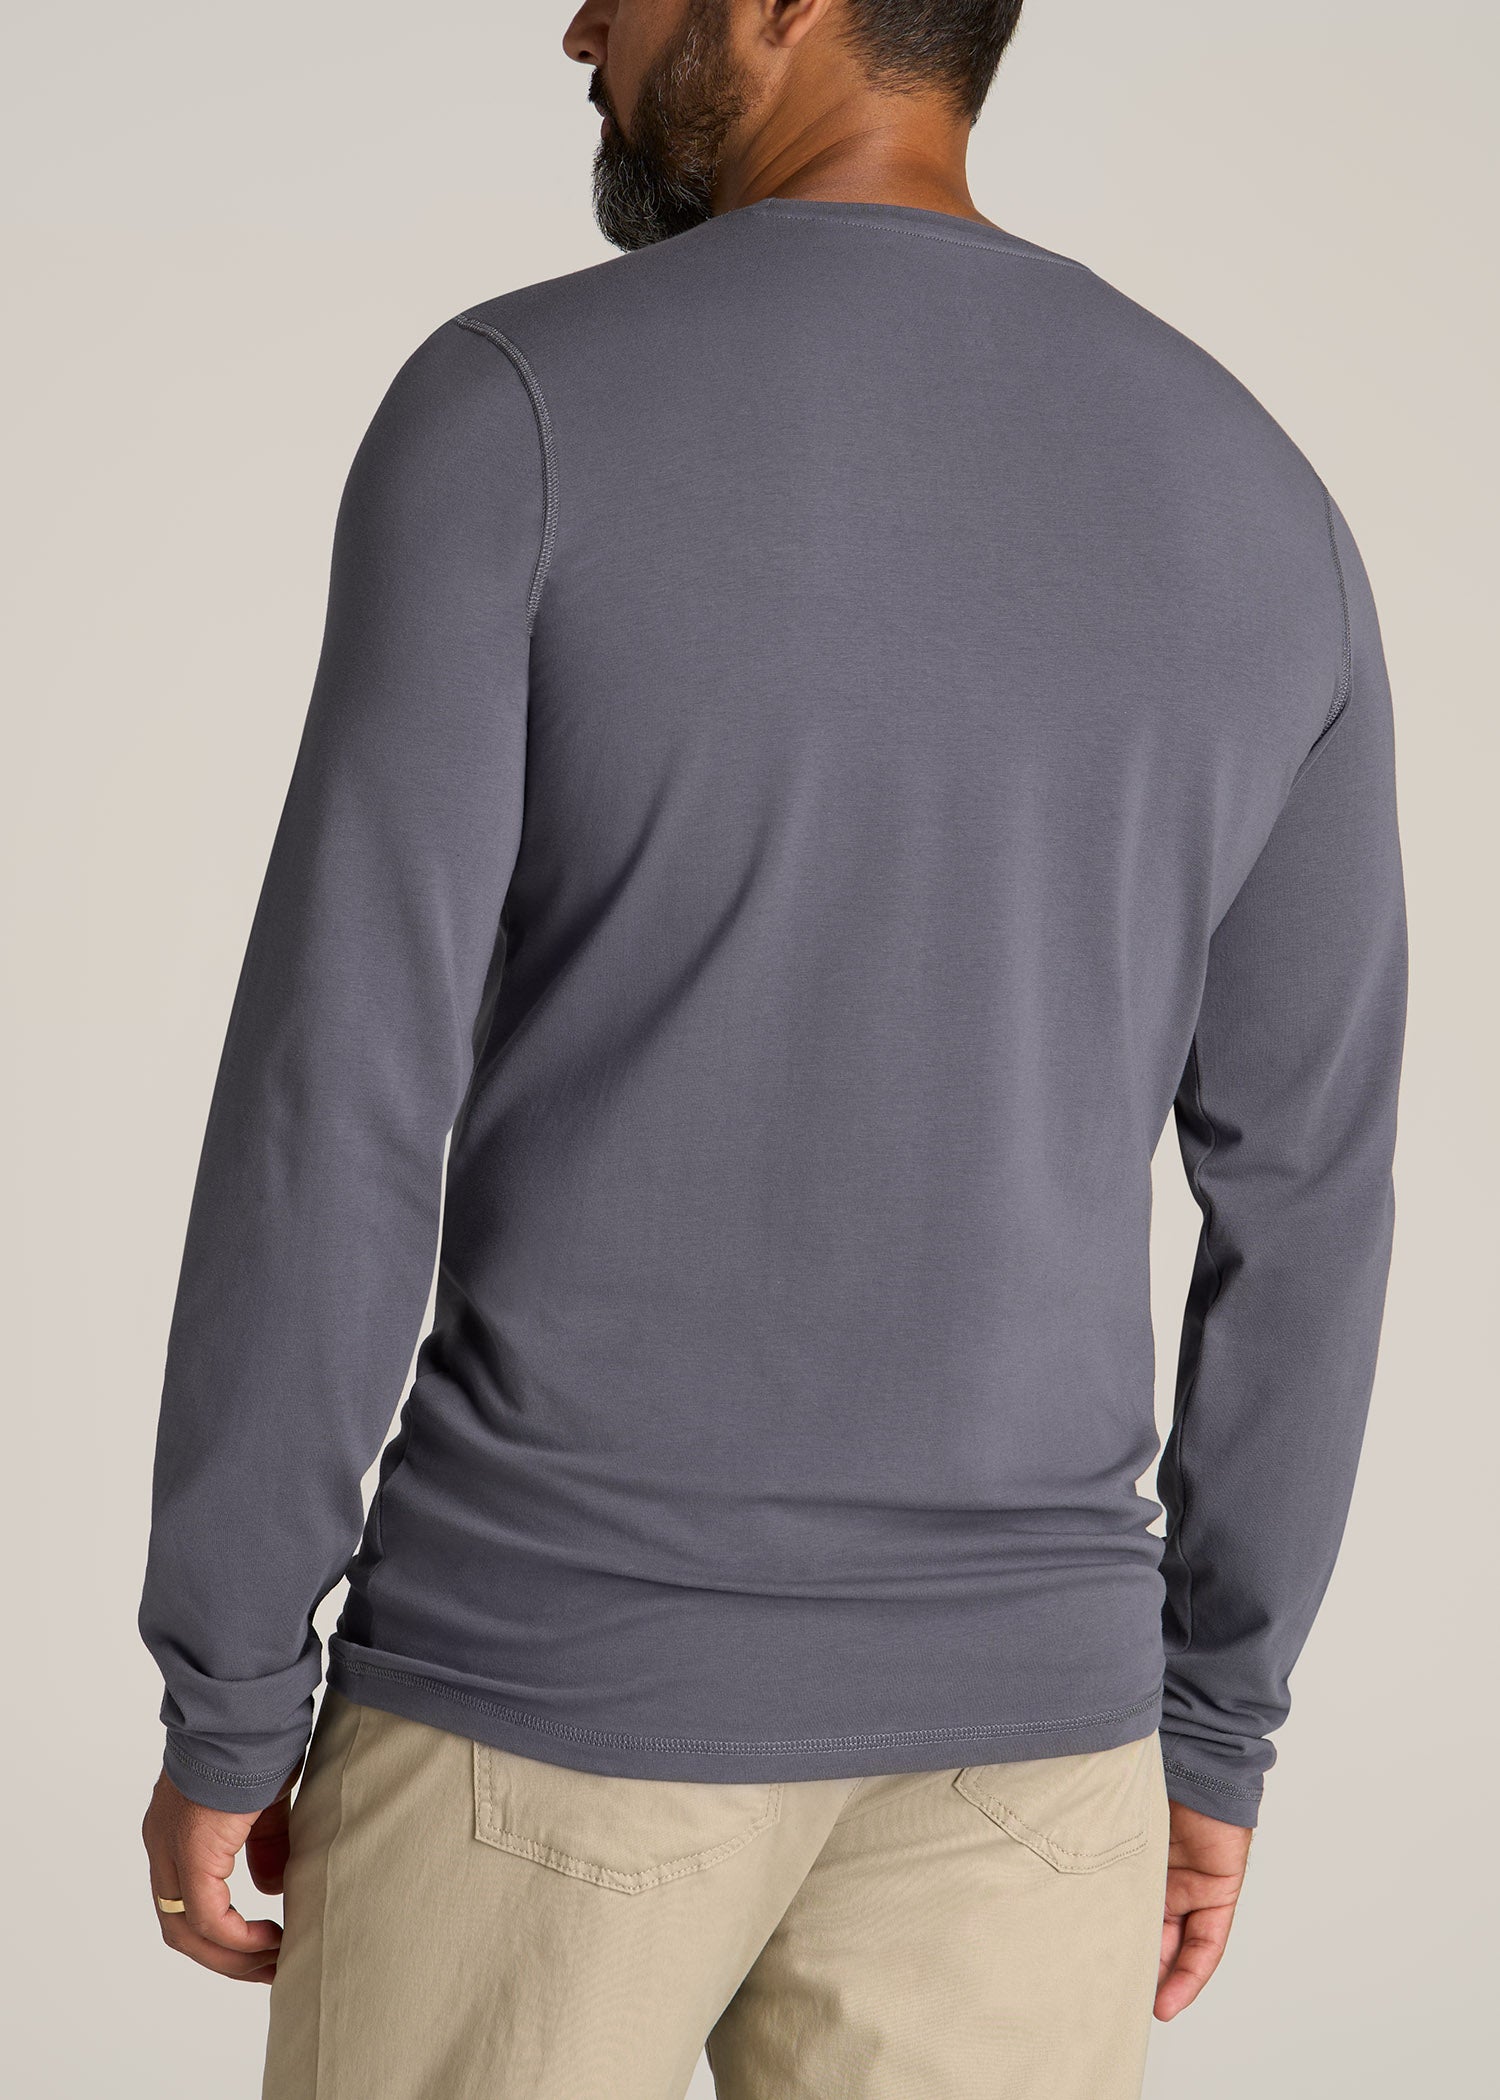 Lululemon Athletica Sweatshirt Crew Neck Long Sleeve Pullover Casual Grey  Blue 8